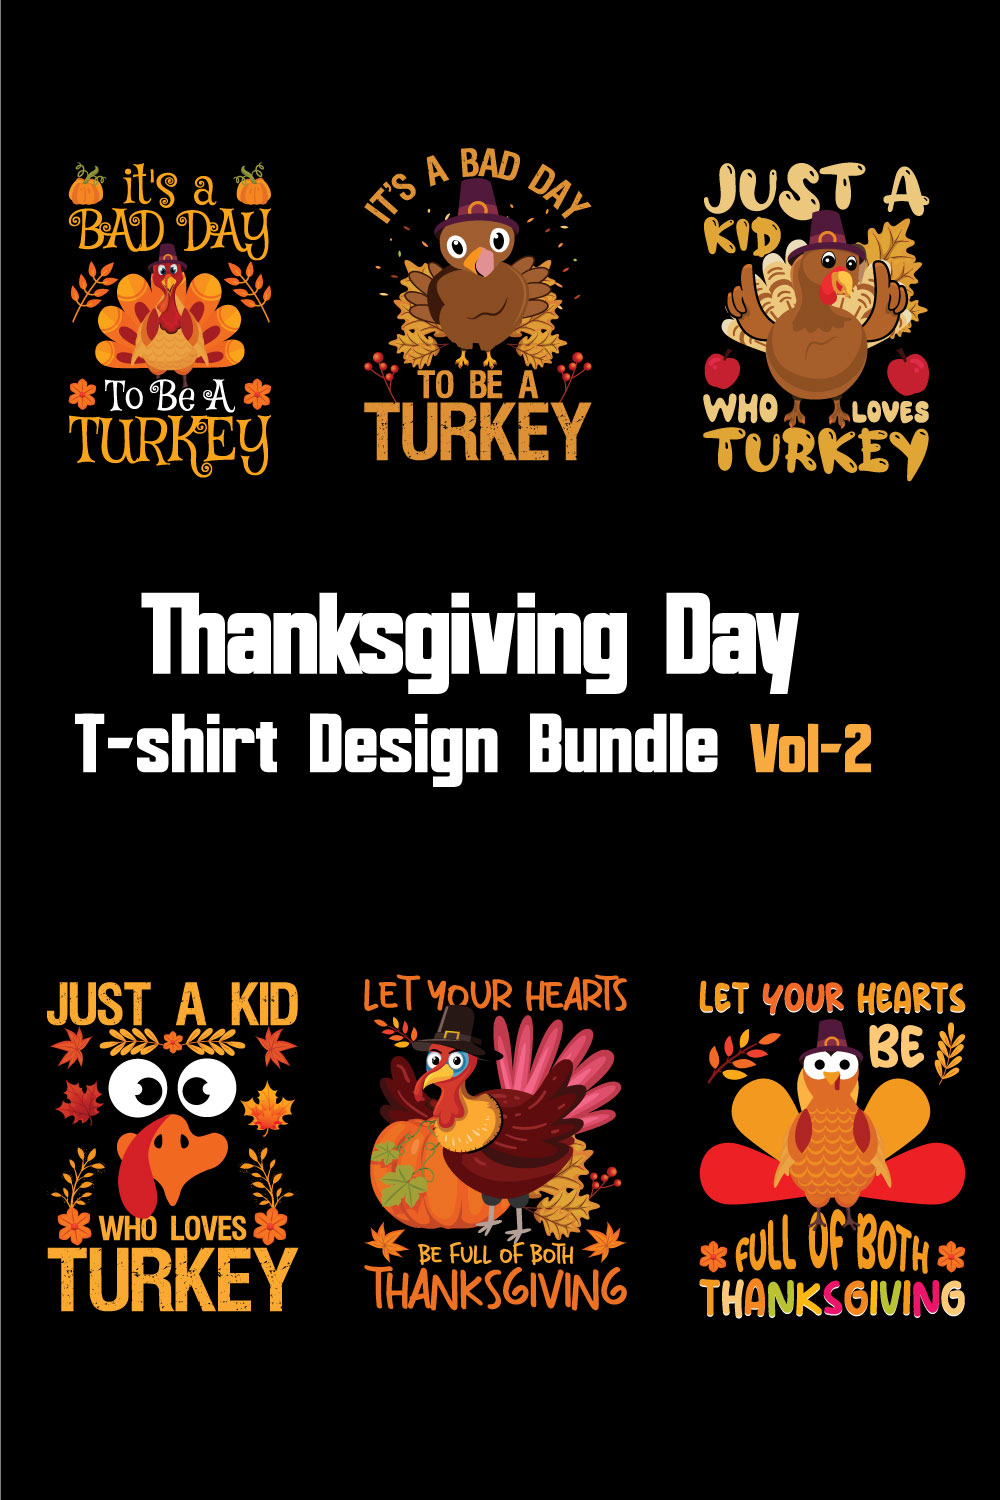 Thanksgiving Day T-shirt Design Bundle Vol-2 pinterest preview image.